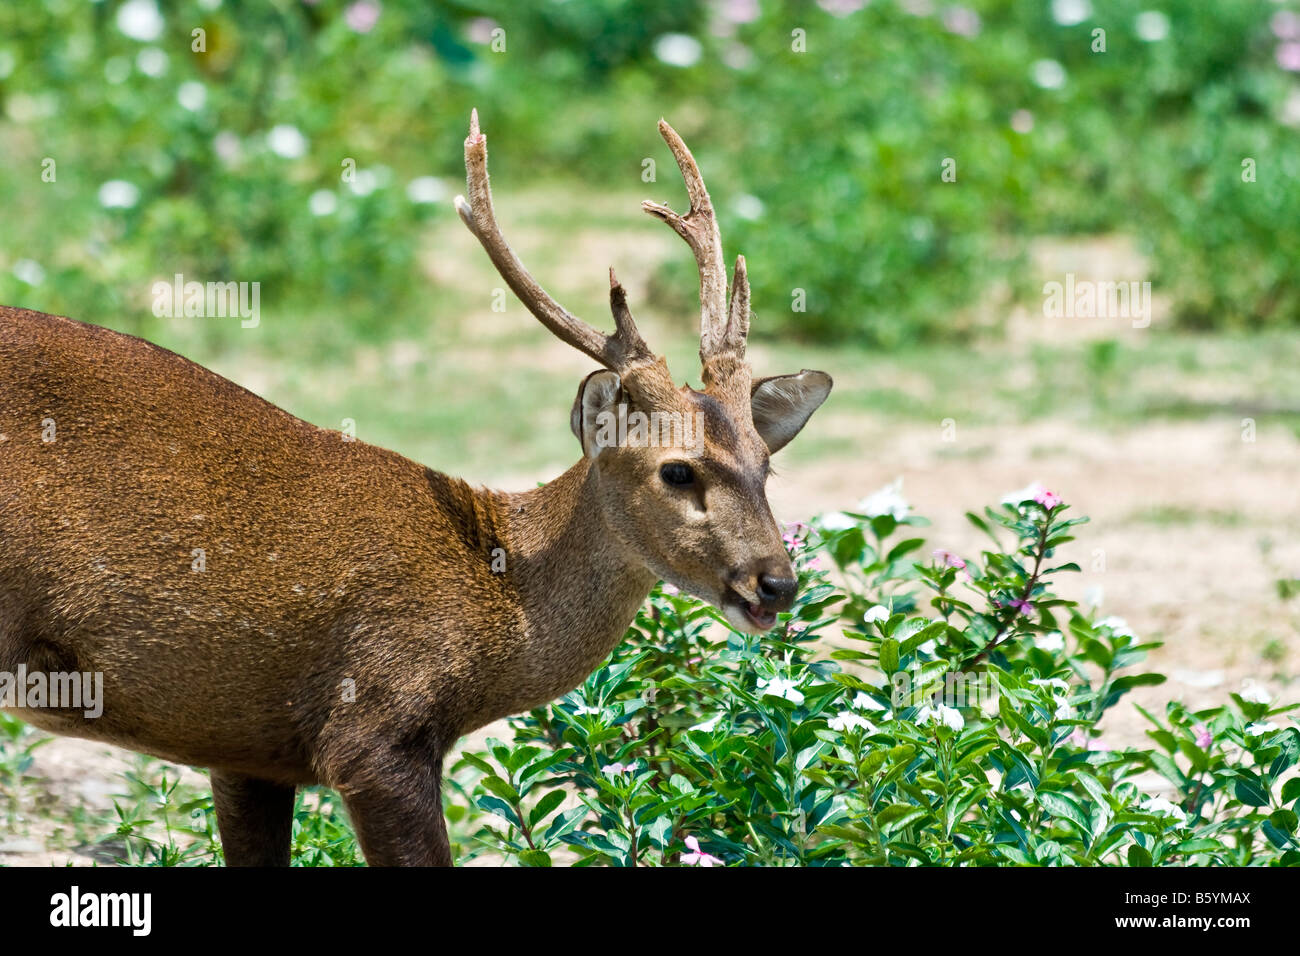 deer Asia hirsch geweih Stock Photo